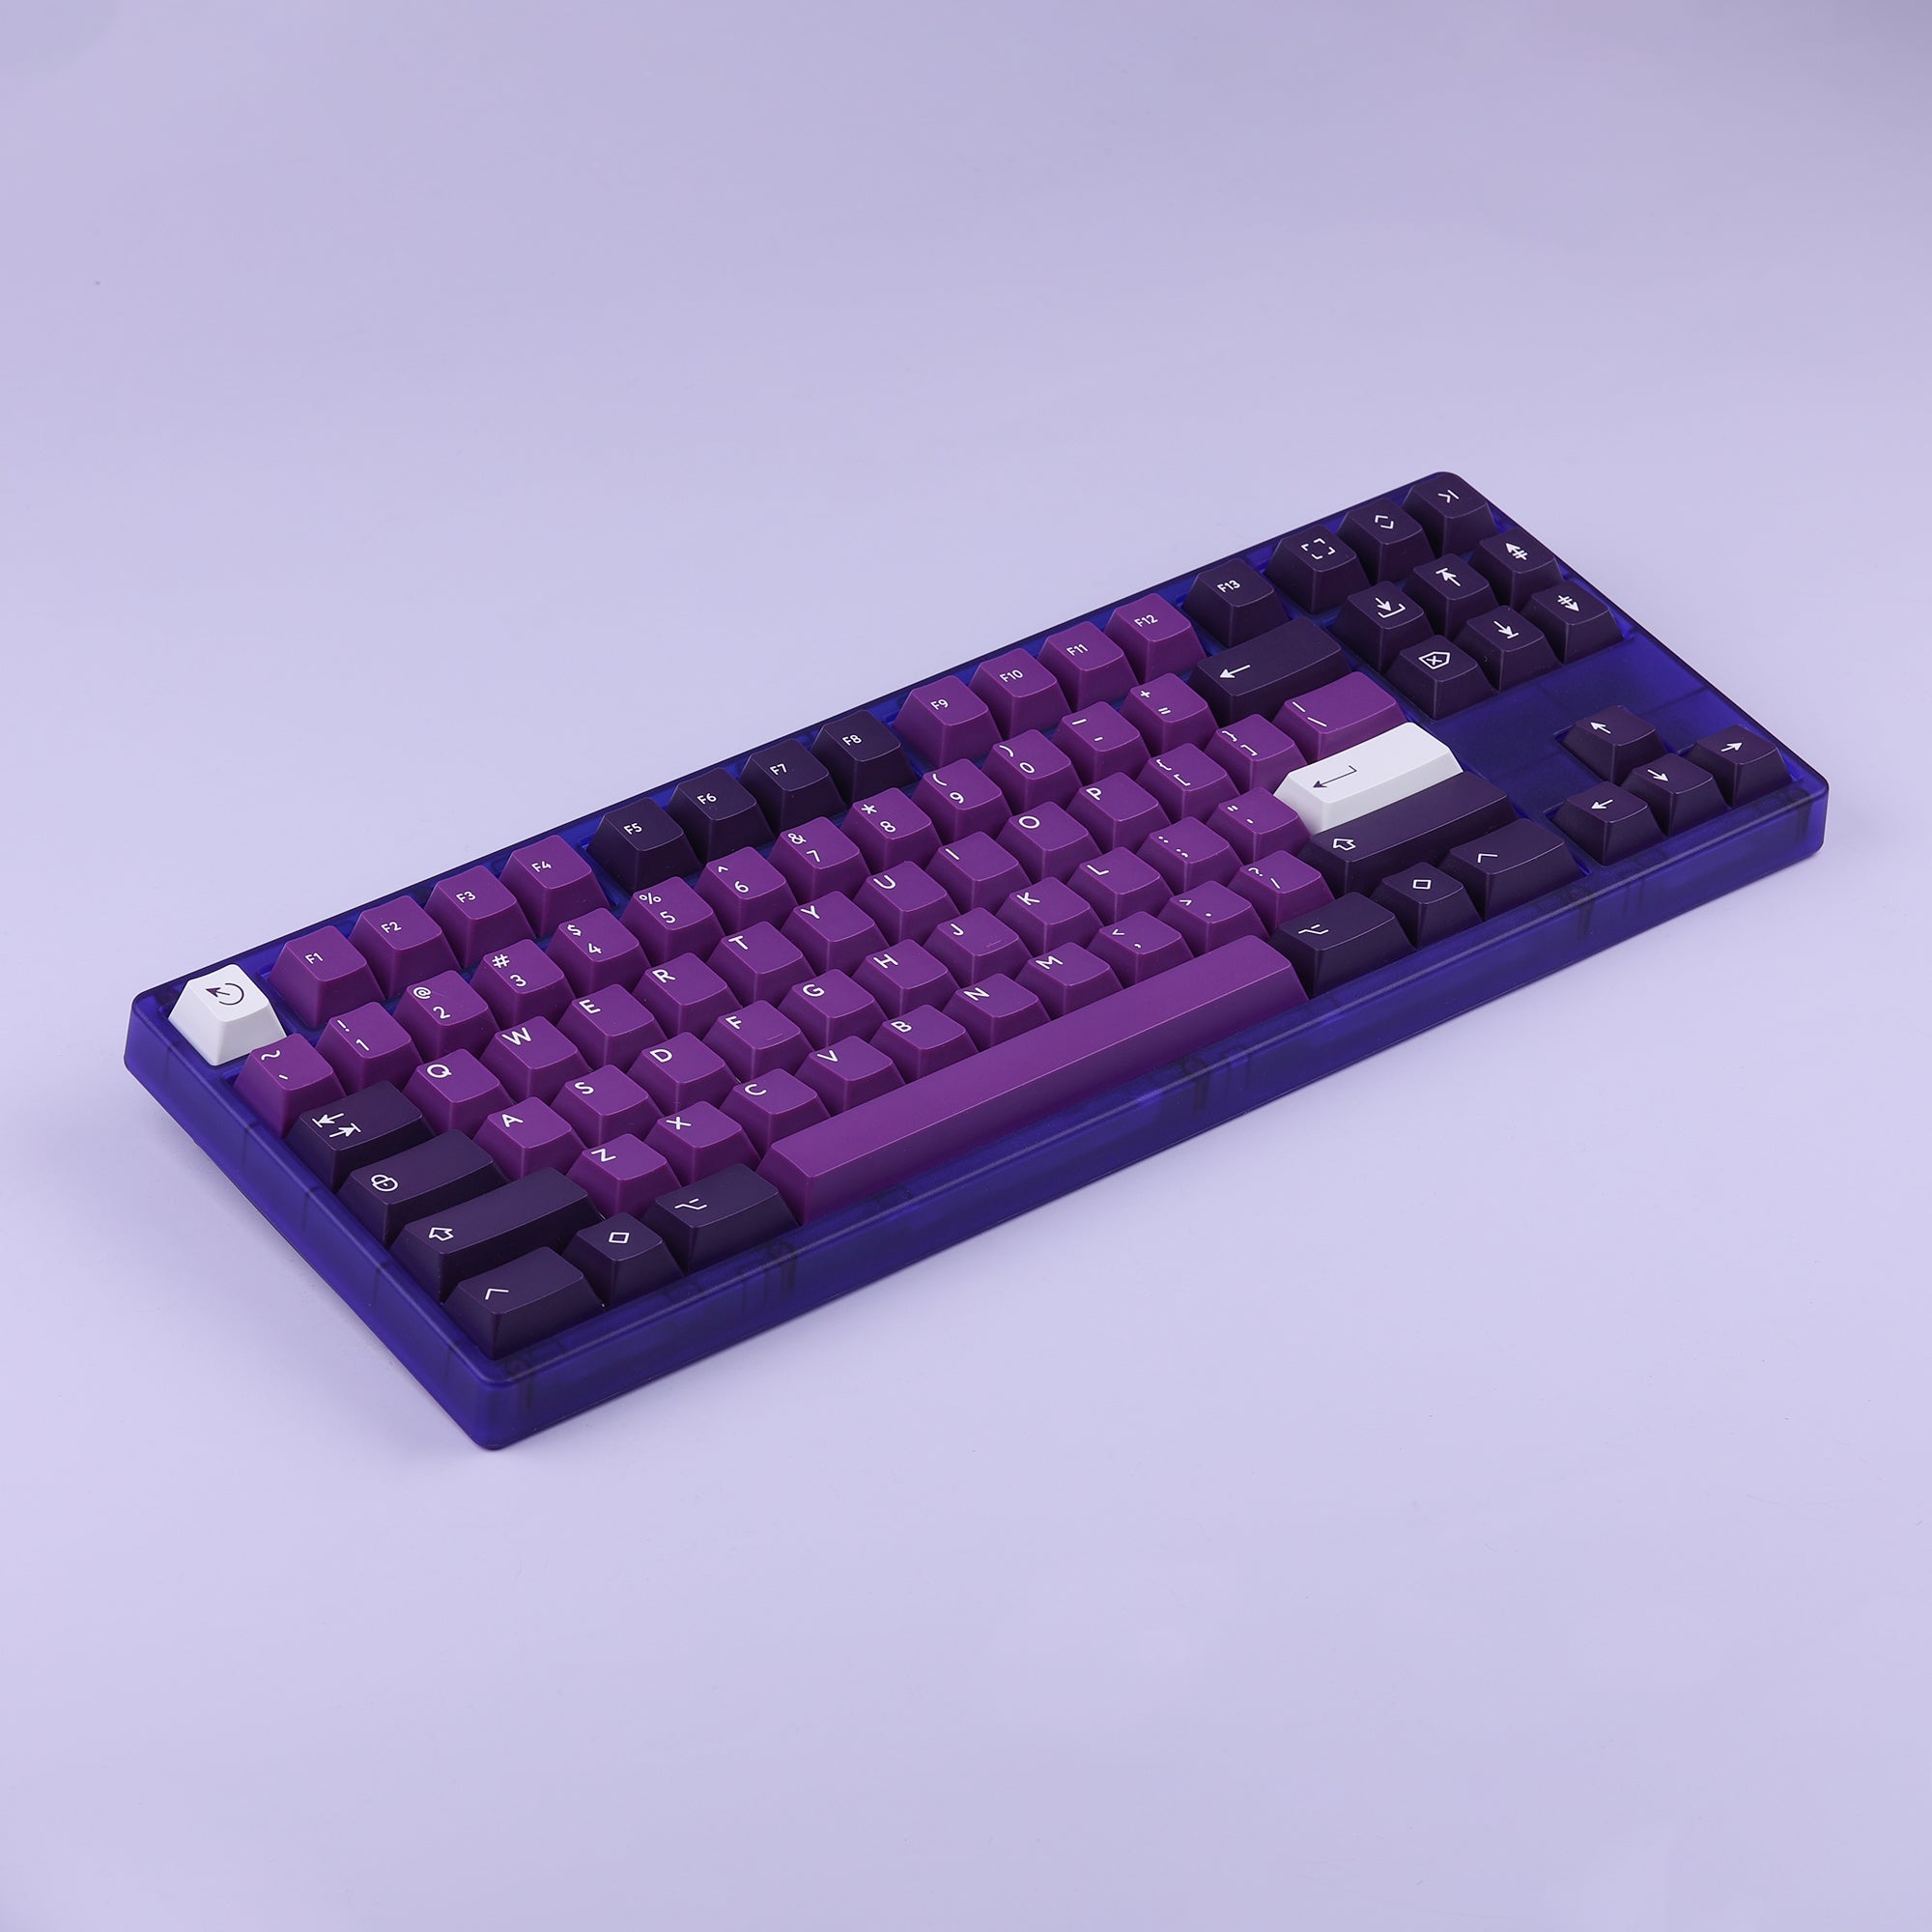 KBDfans Custom Keyboard Ready To Use Tiger Lite Hot-swap Keyboard With PBTfans Purpurite Keycaps